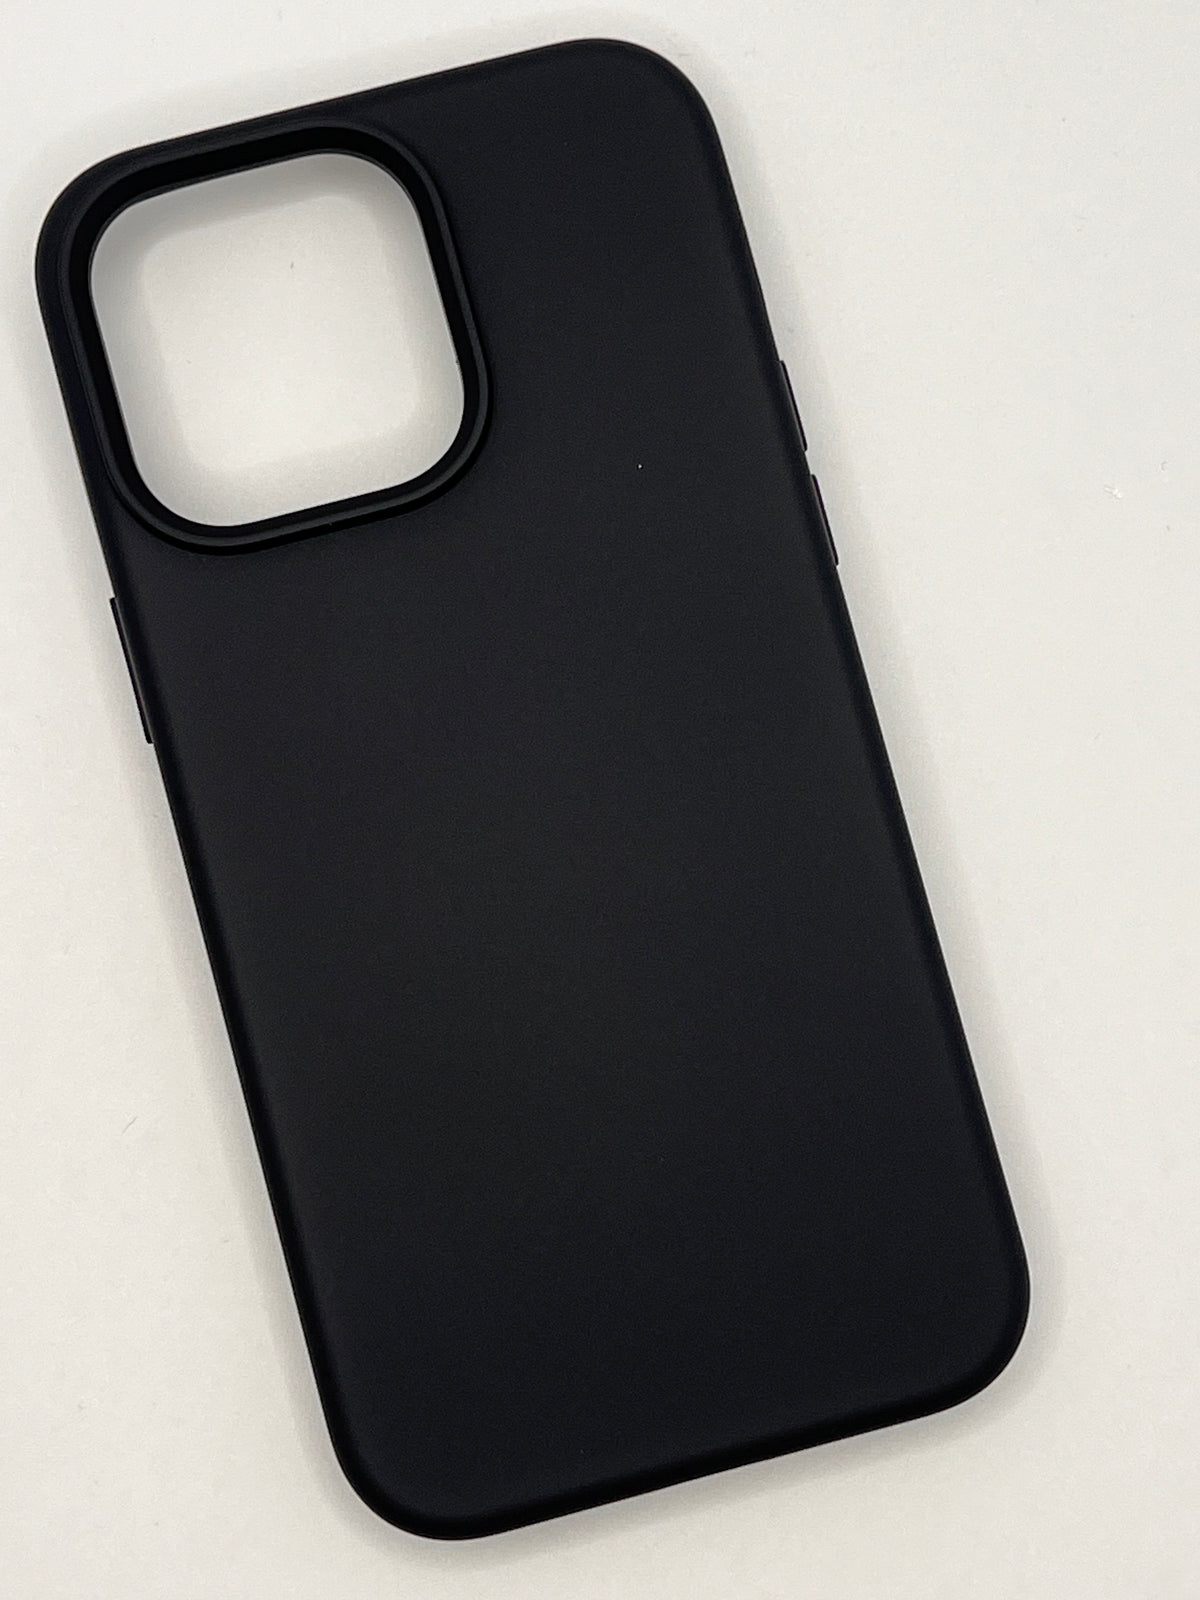 iPhone 11 Pro Max Apple Hard Case